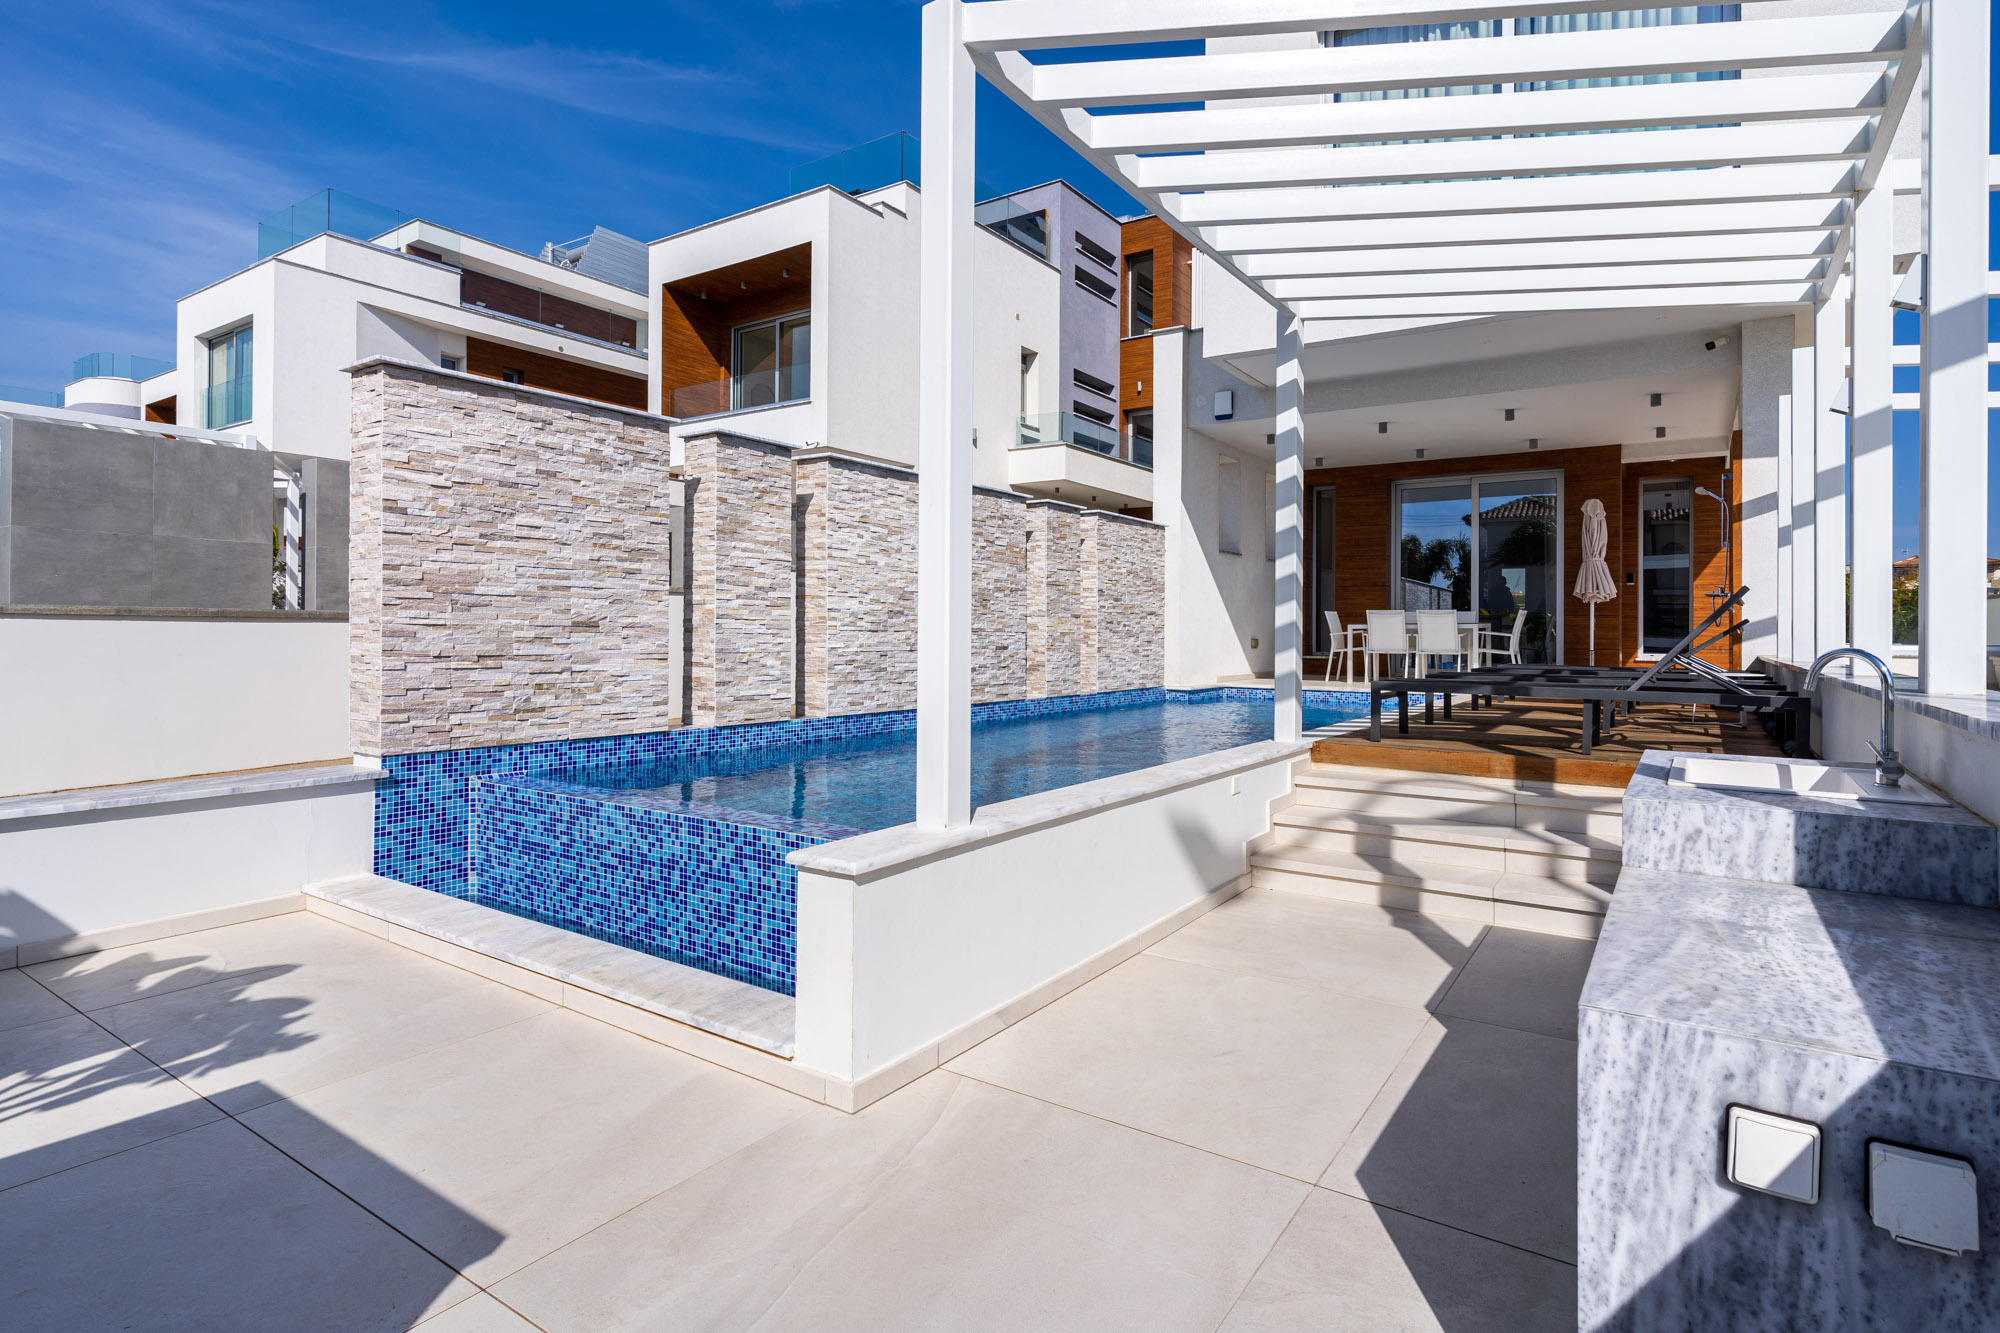 REF:  NHILLS 4 bedroom Stunning Villa Kokkines €4000.00pcm